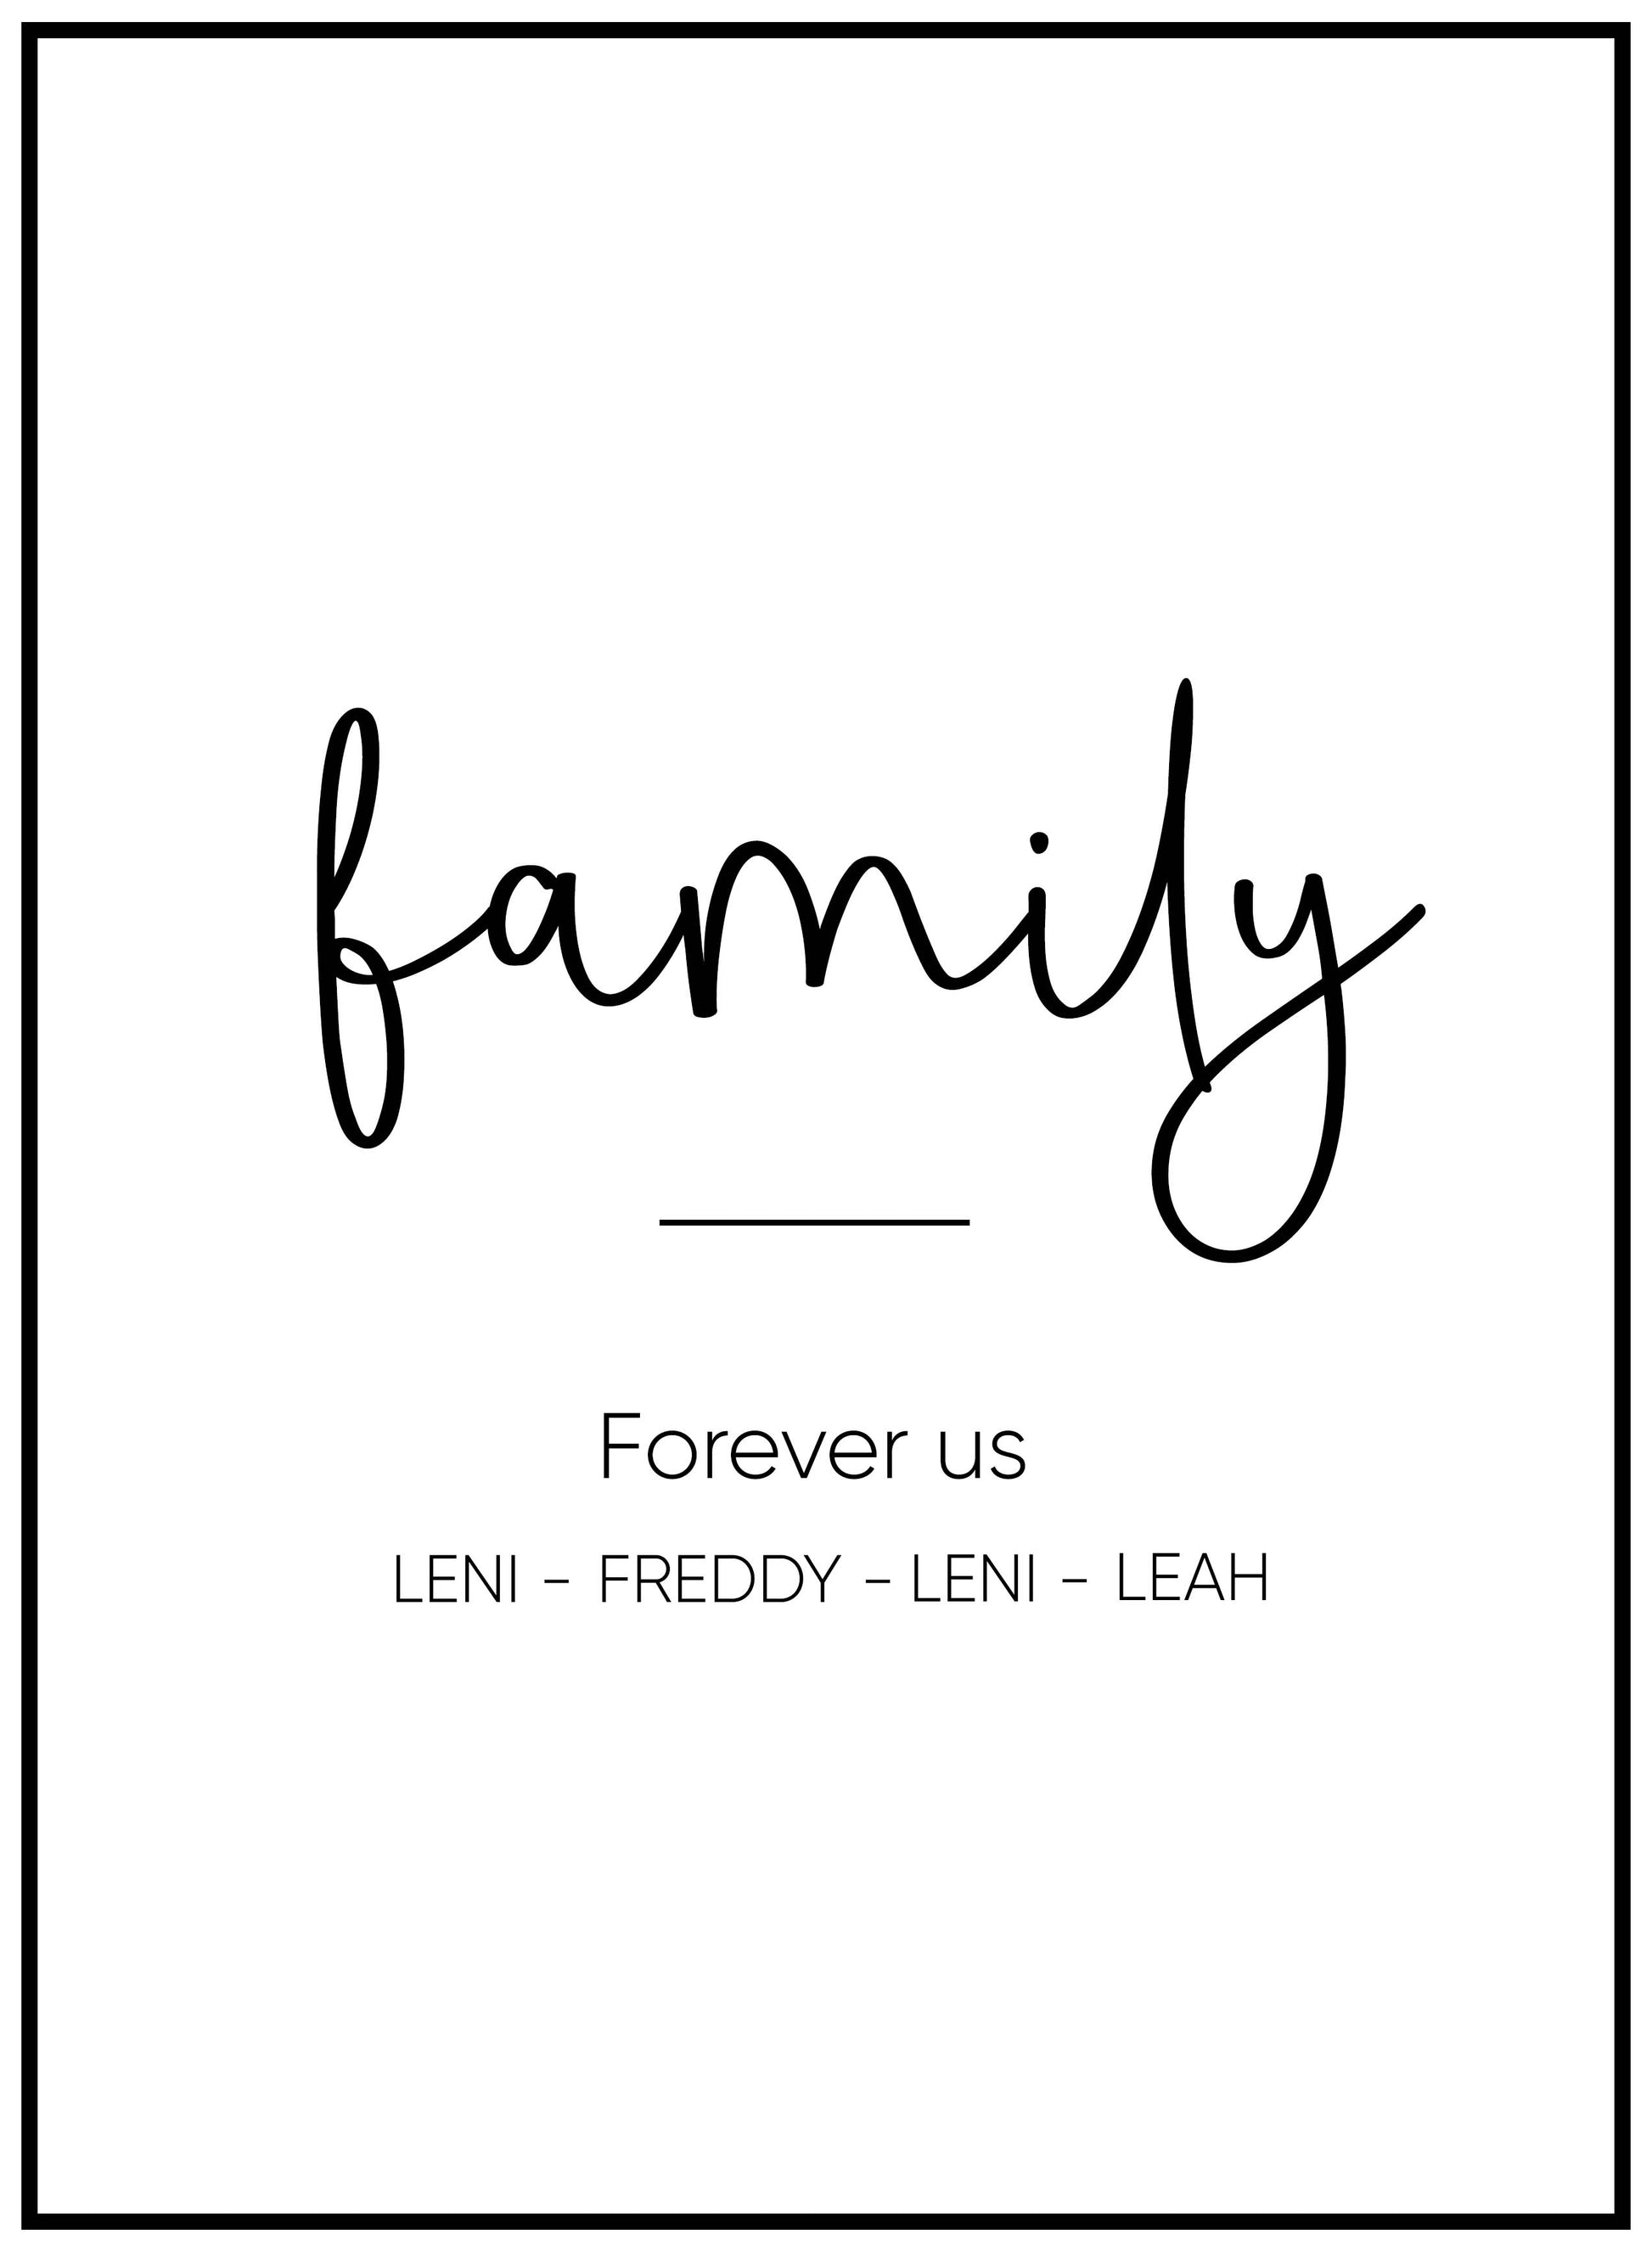 Family - YP Design